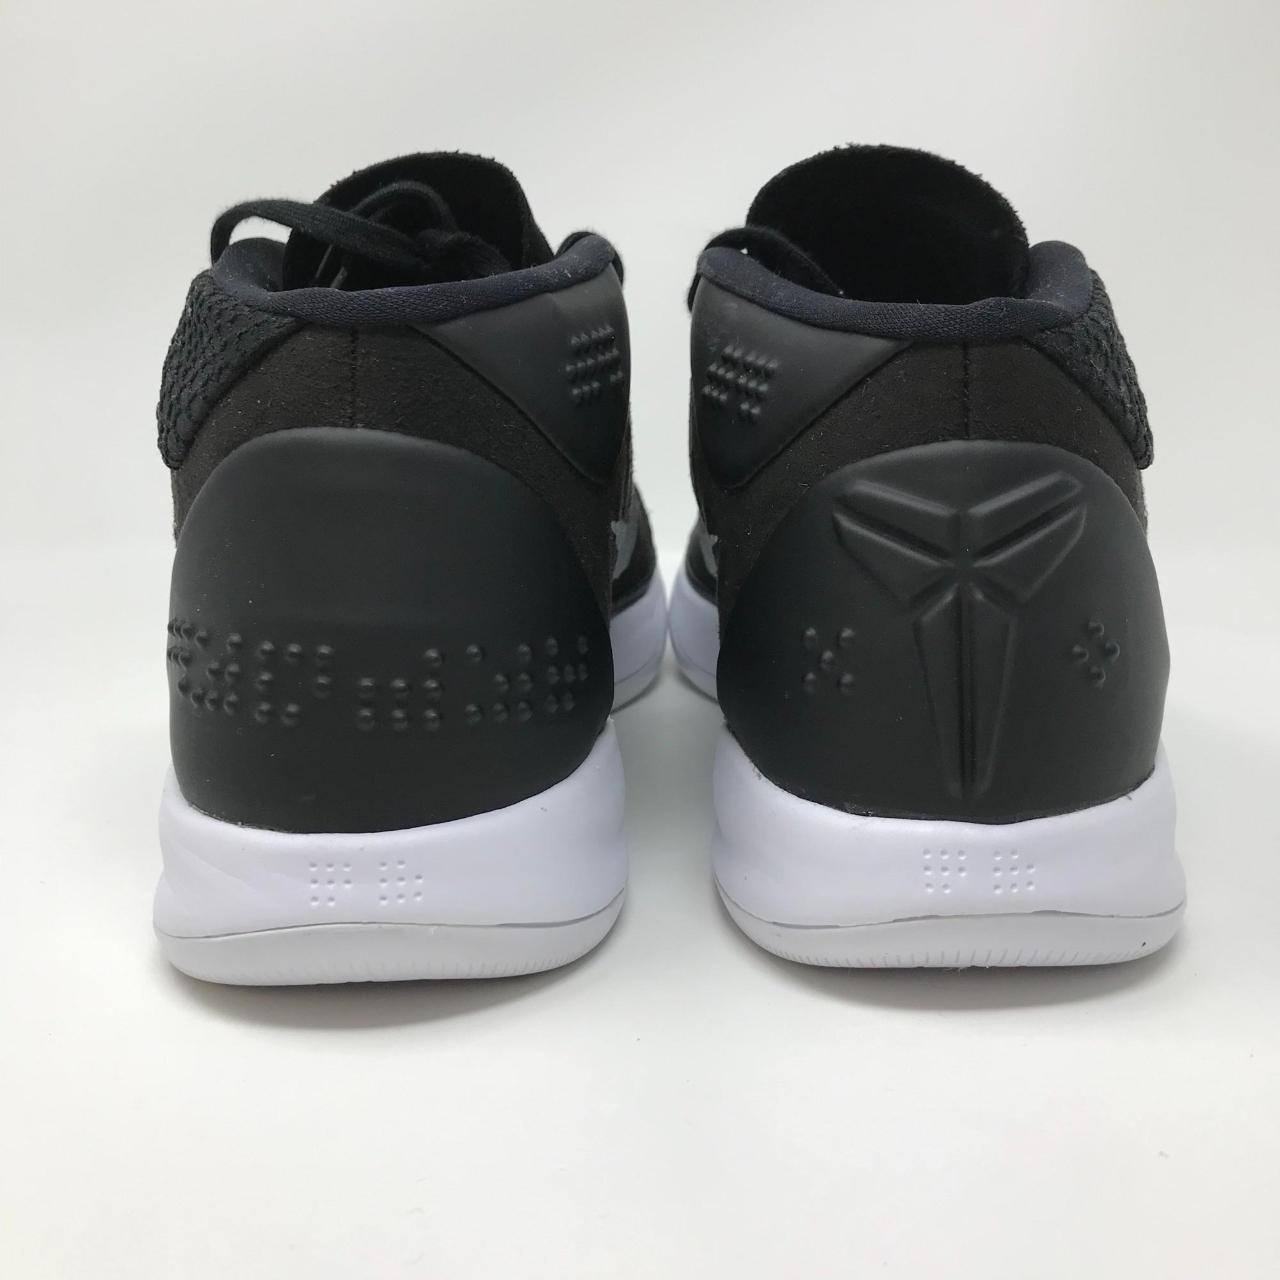 Nike Men's Kobe AD TB Basketball Shoes (Size... - Depop